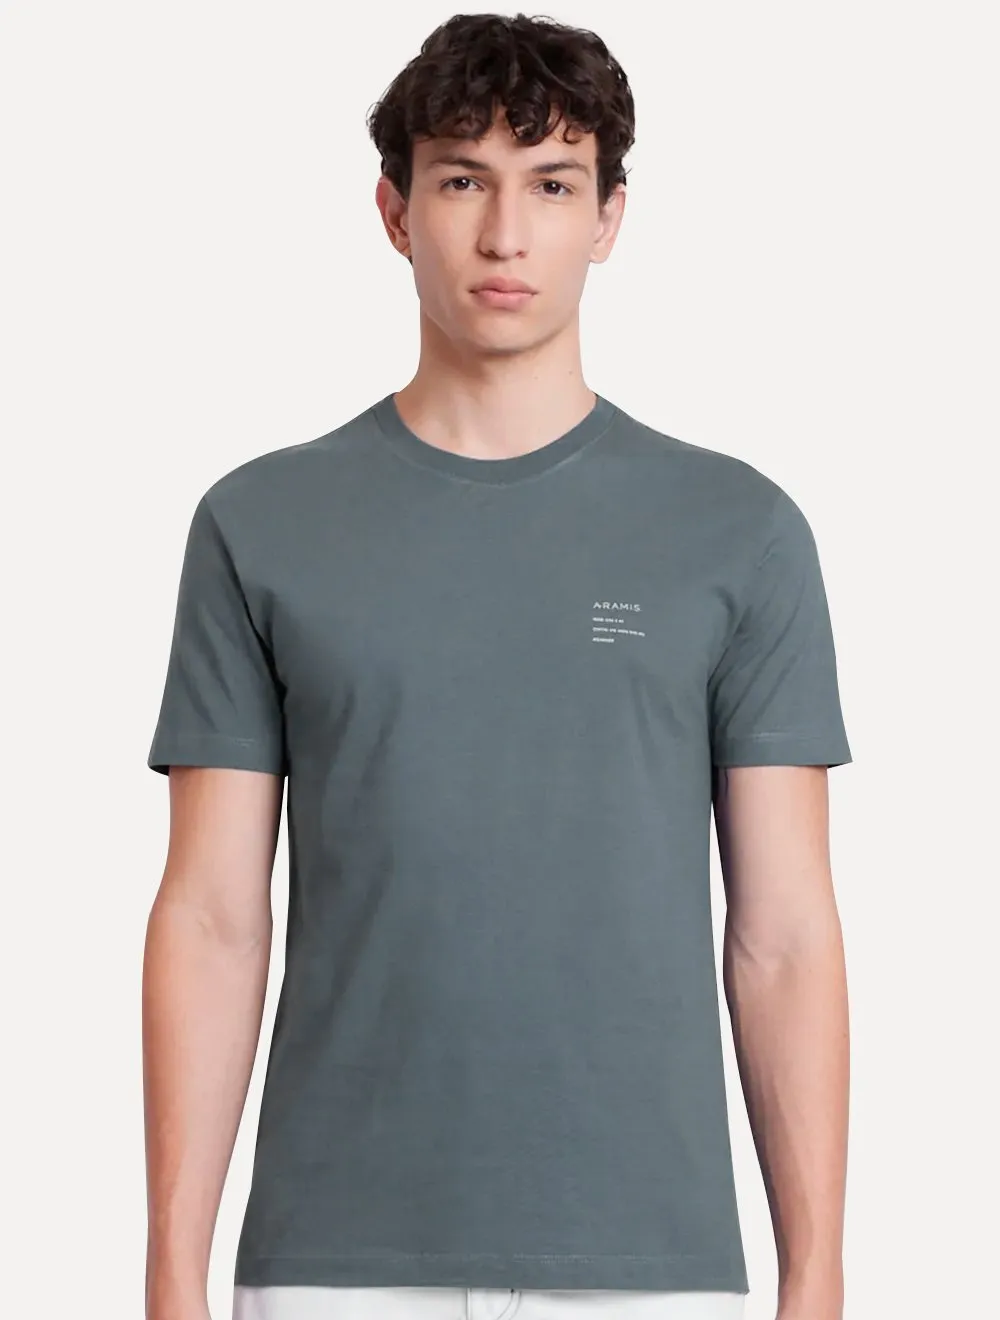 Camiseta Aramis Masculina Estampa Costas Gradiente Cinza Escuro